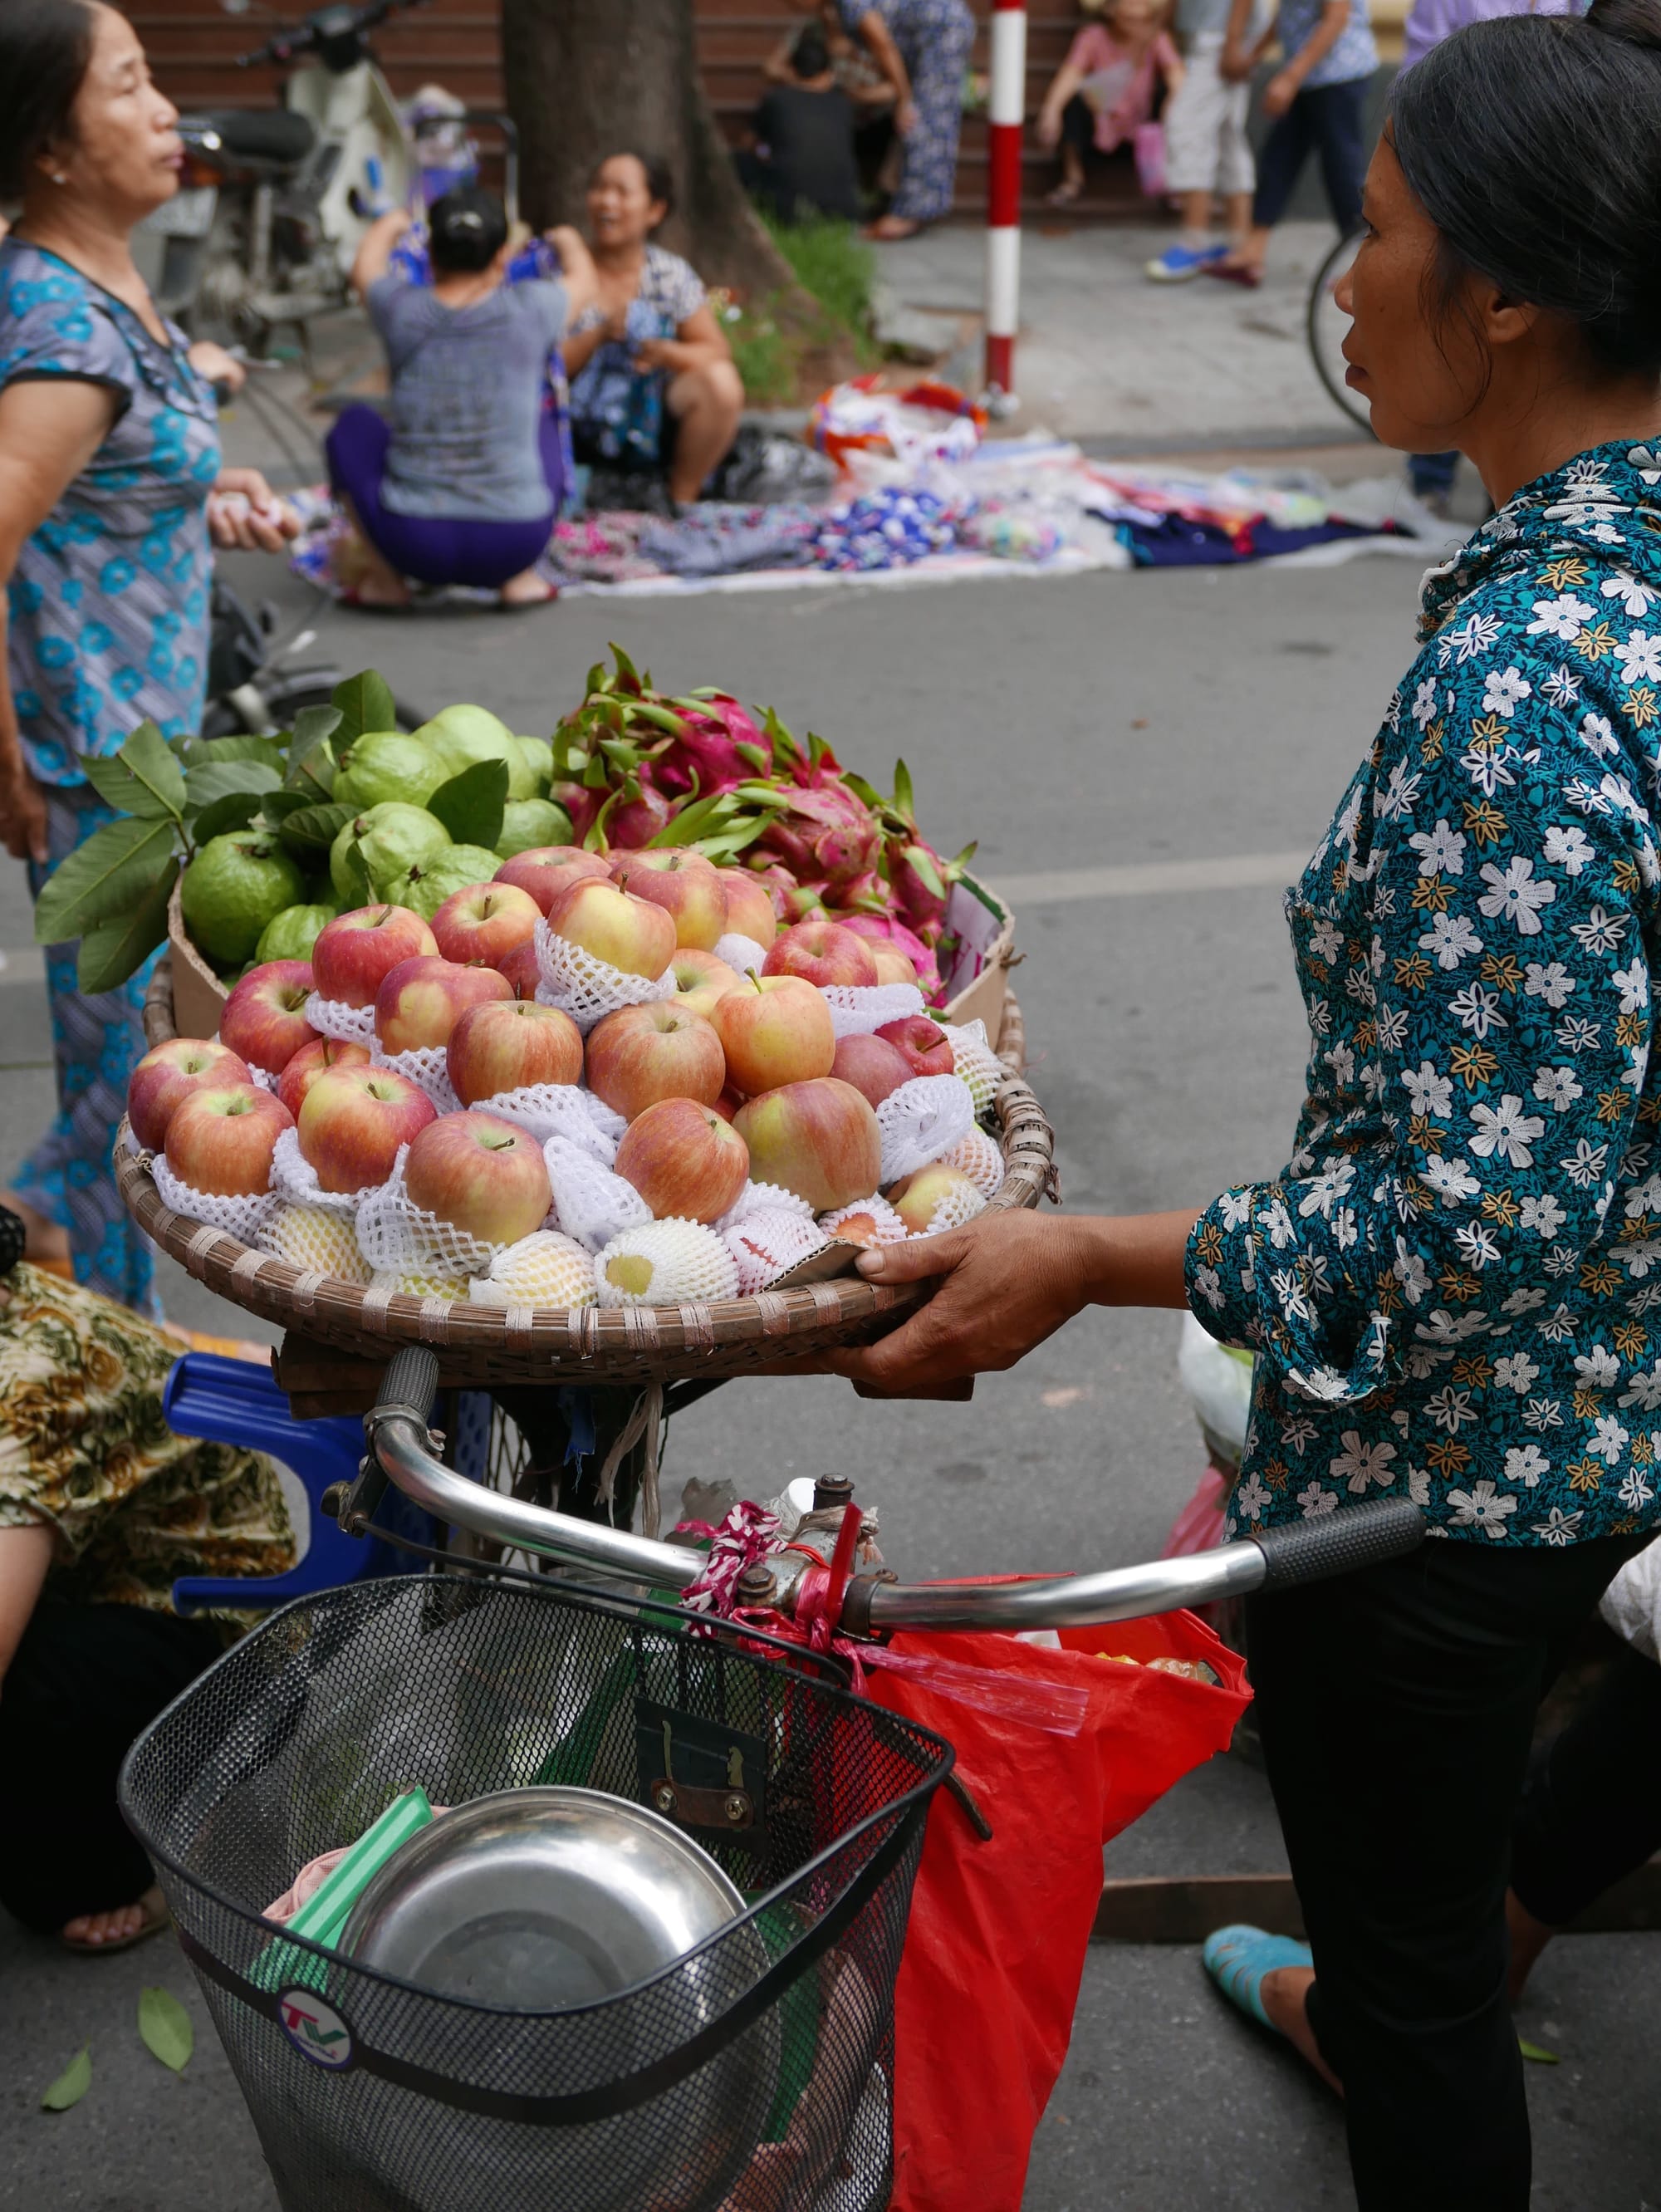 Photo by Author — Street Market near Hồ Hoàn Kiếm (Hoan Kiem Lake), Hanoi, Vietnam